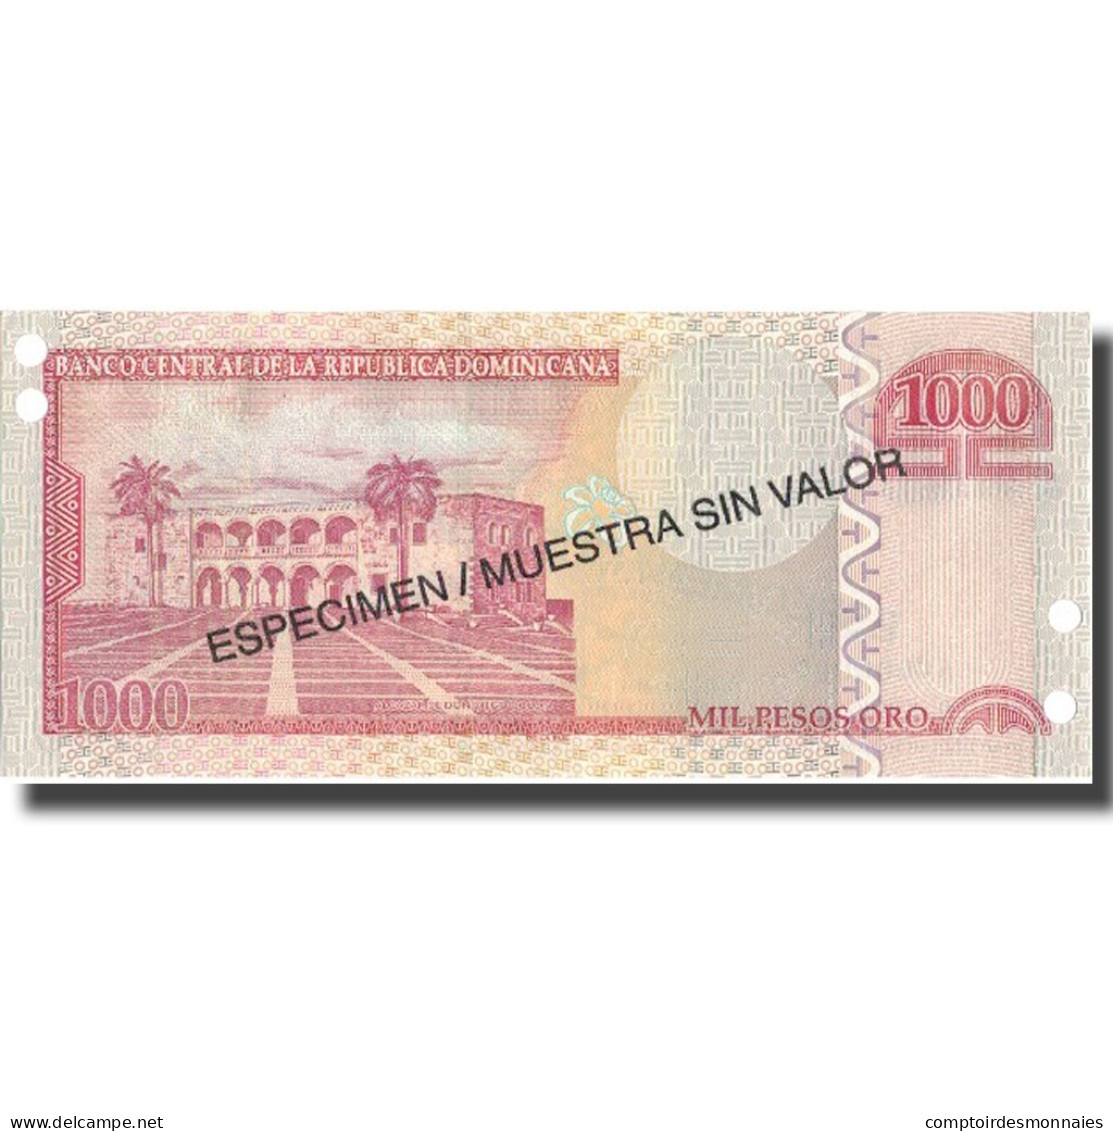 Billet, Dominican Republic, 1000 Pesos Oro, 2003, 2003, KM:173s2, NEUF - Dominicaine